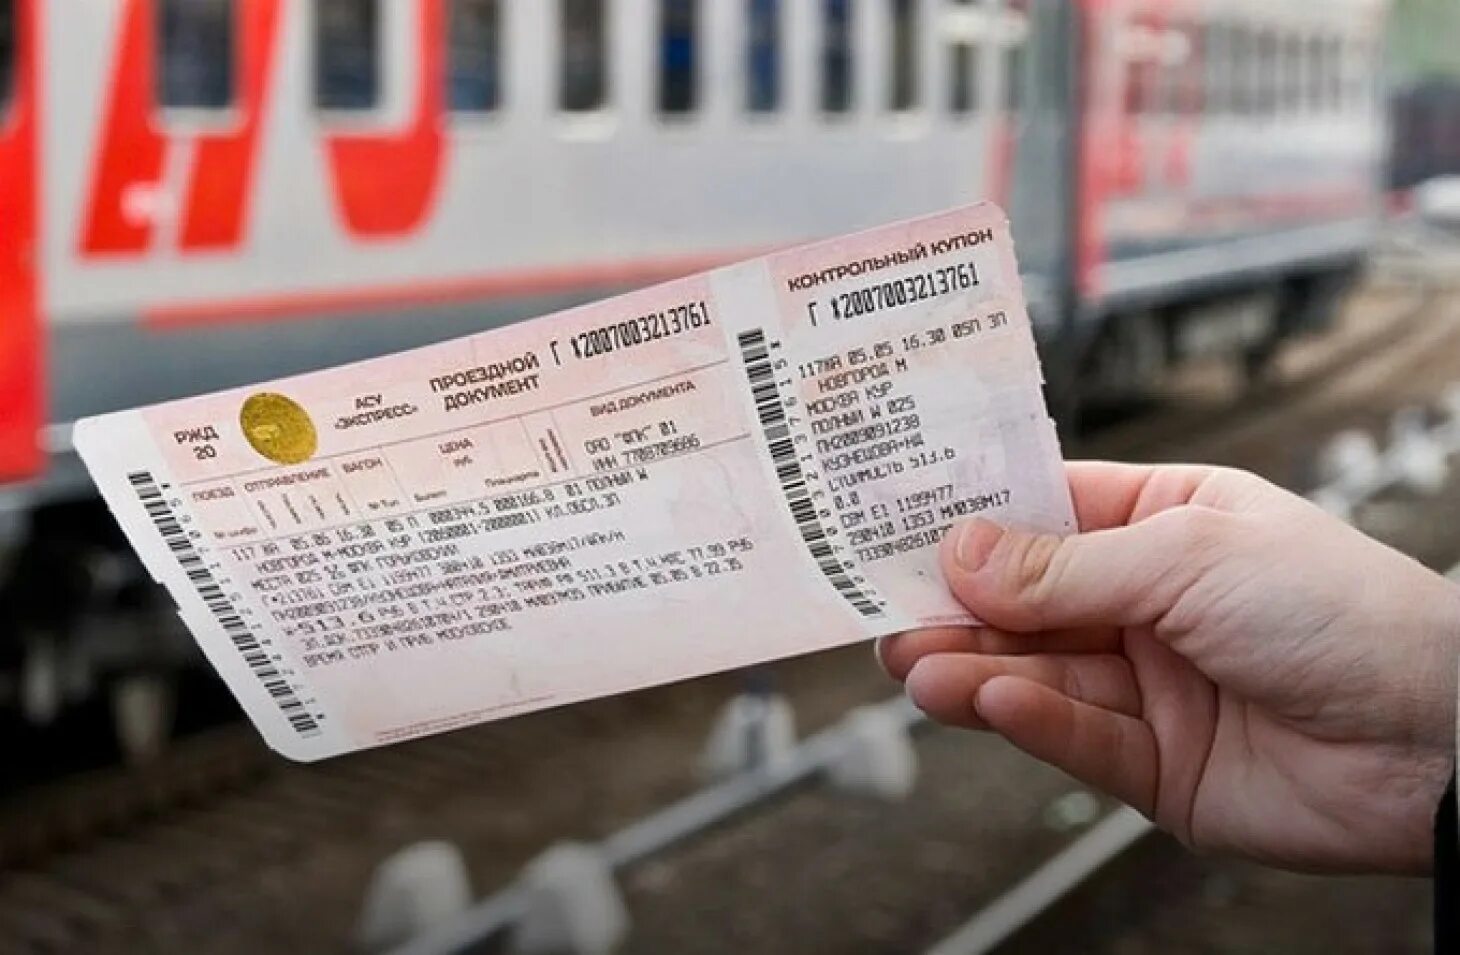 Взять жд билет. ЖД билеты. Билеты РЖД. Фото билетов на поезд. Железный дорога билет.